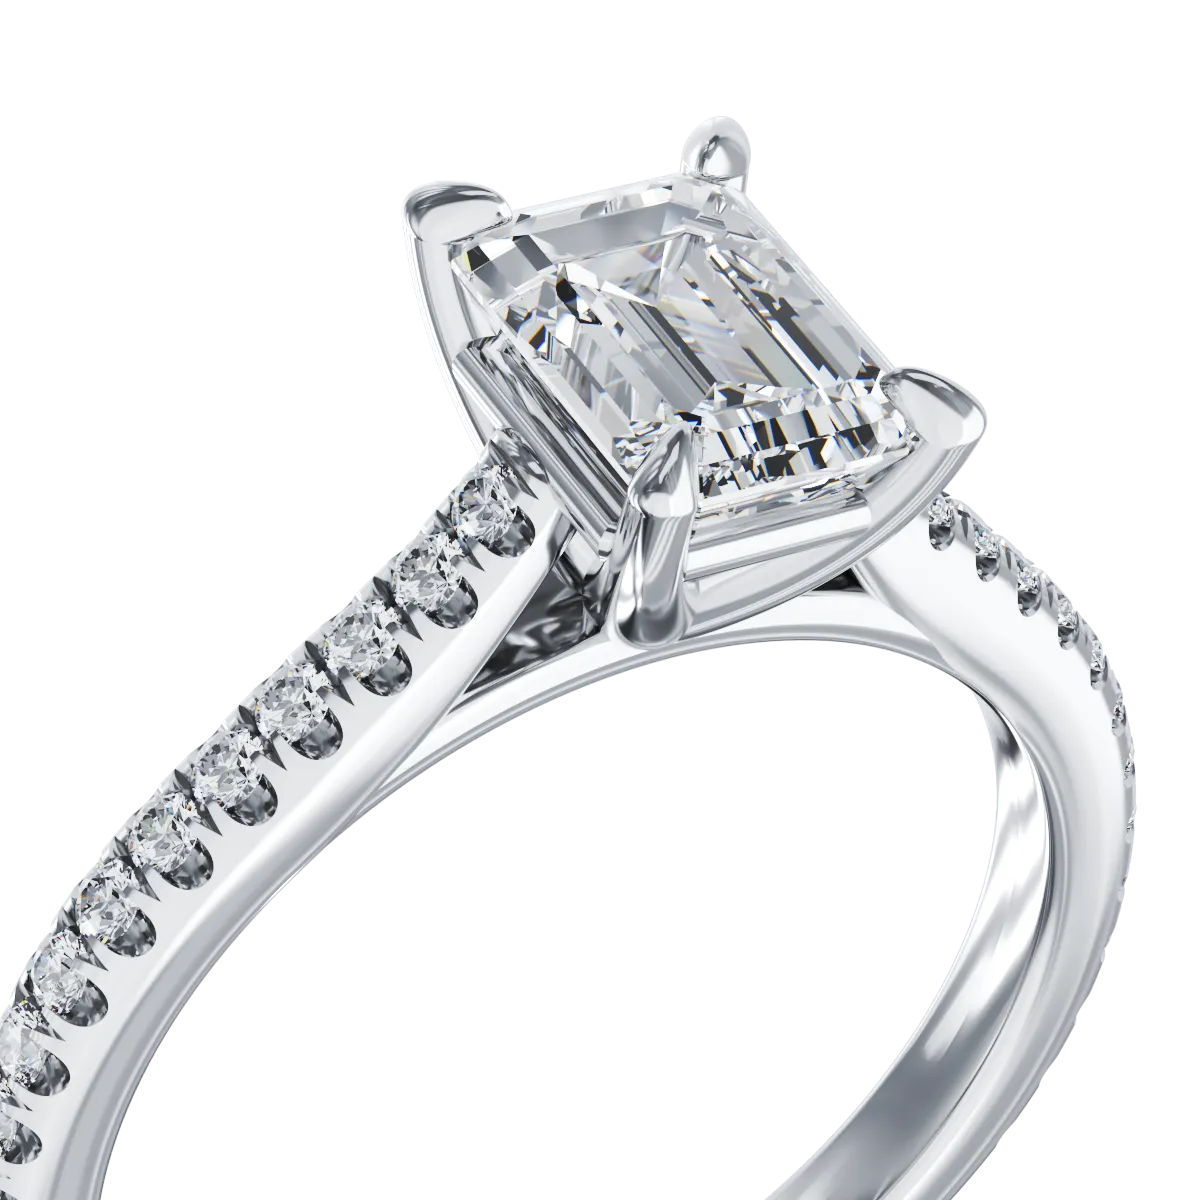 Diamond platinum engagement ring with 1ct diamond and 0.223ct diamonds